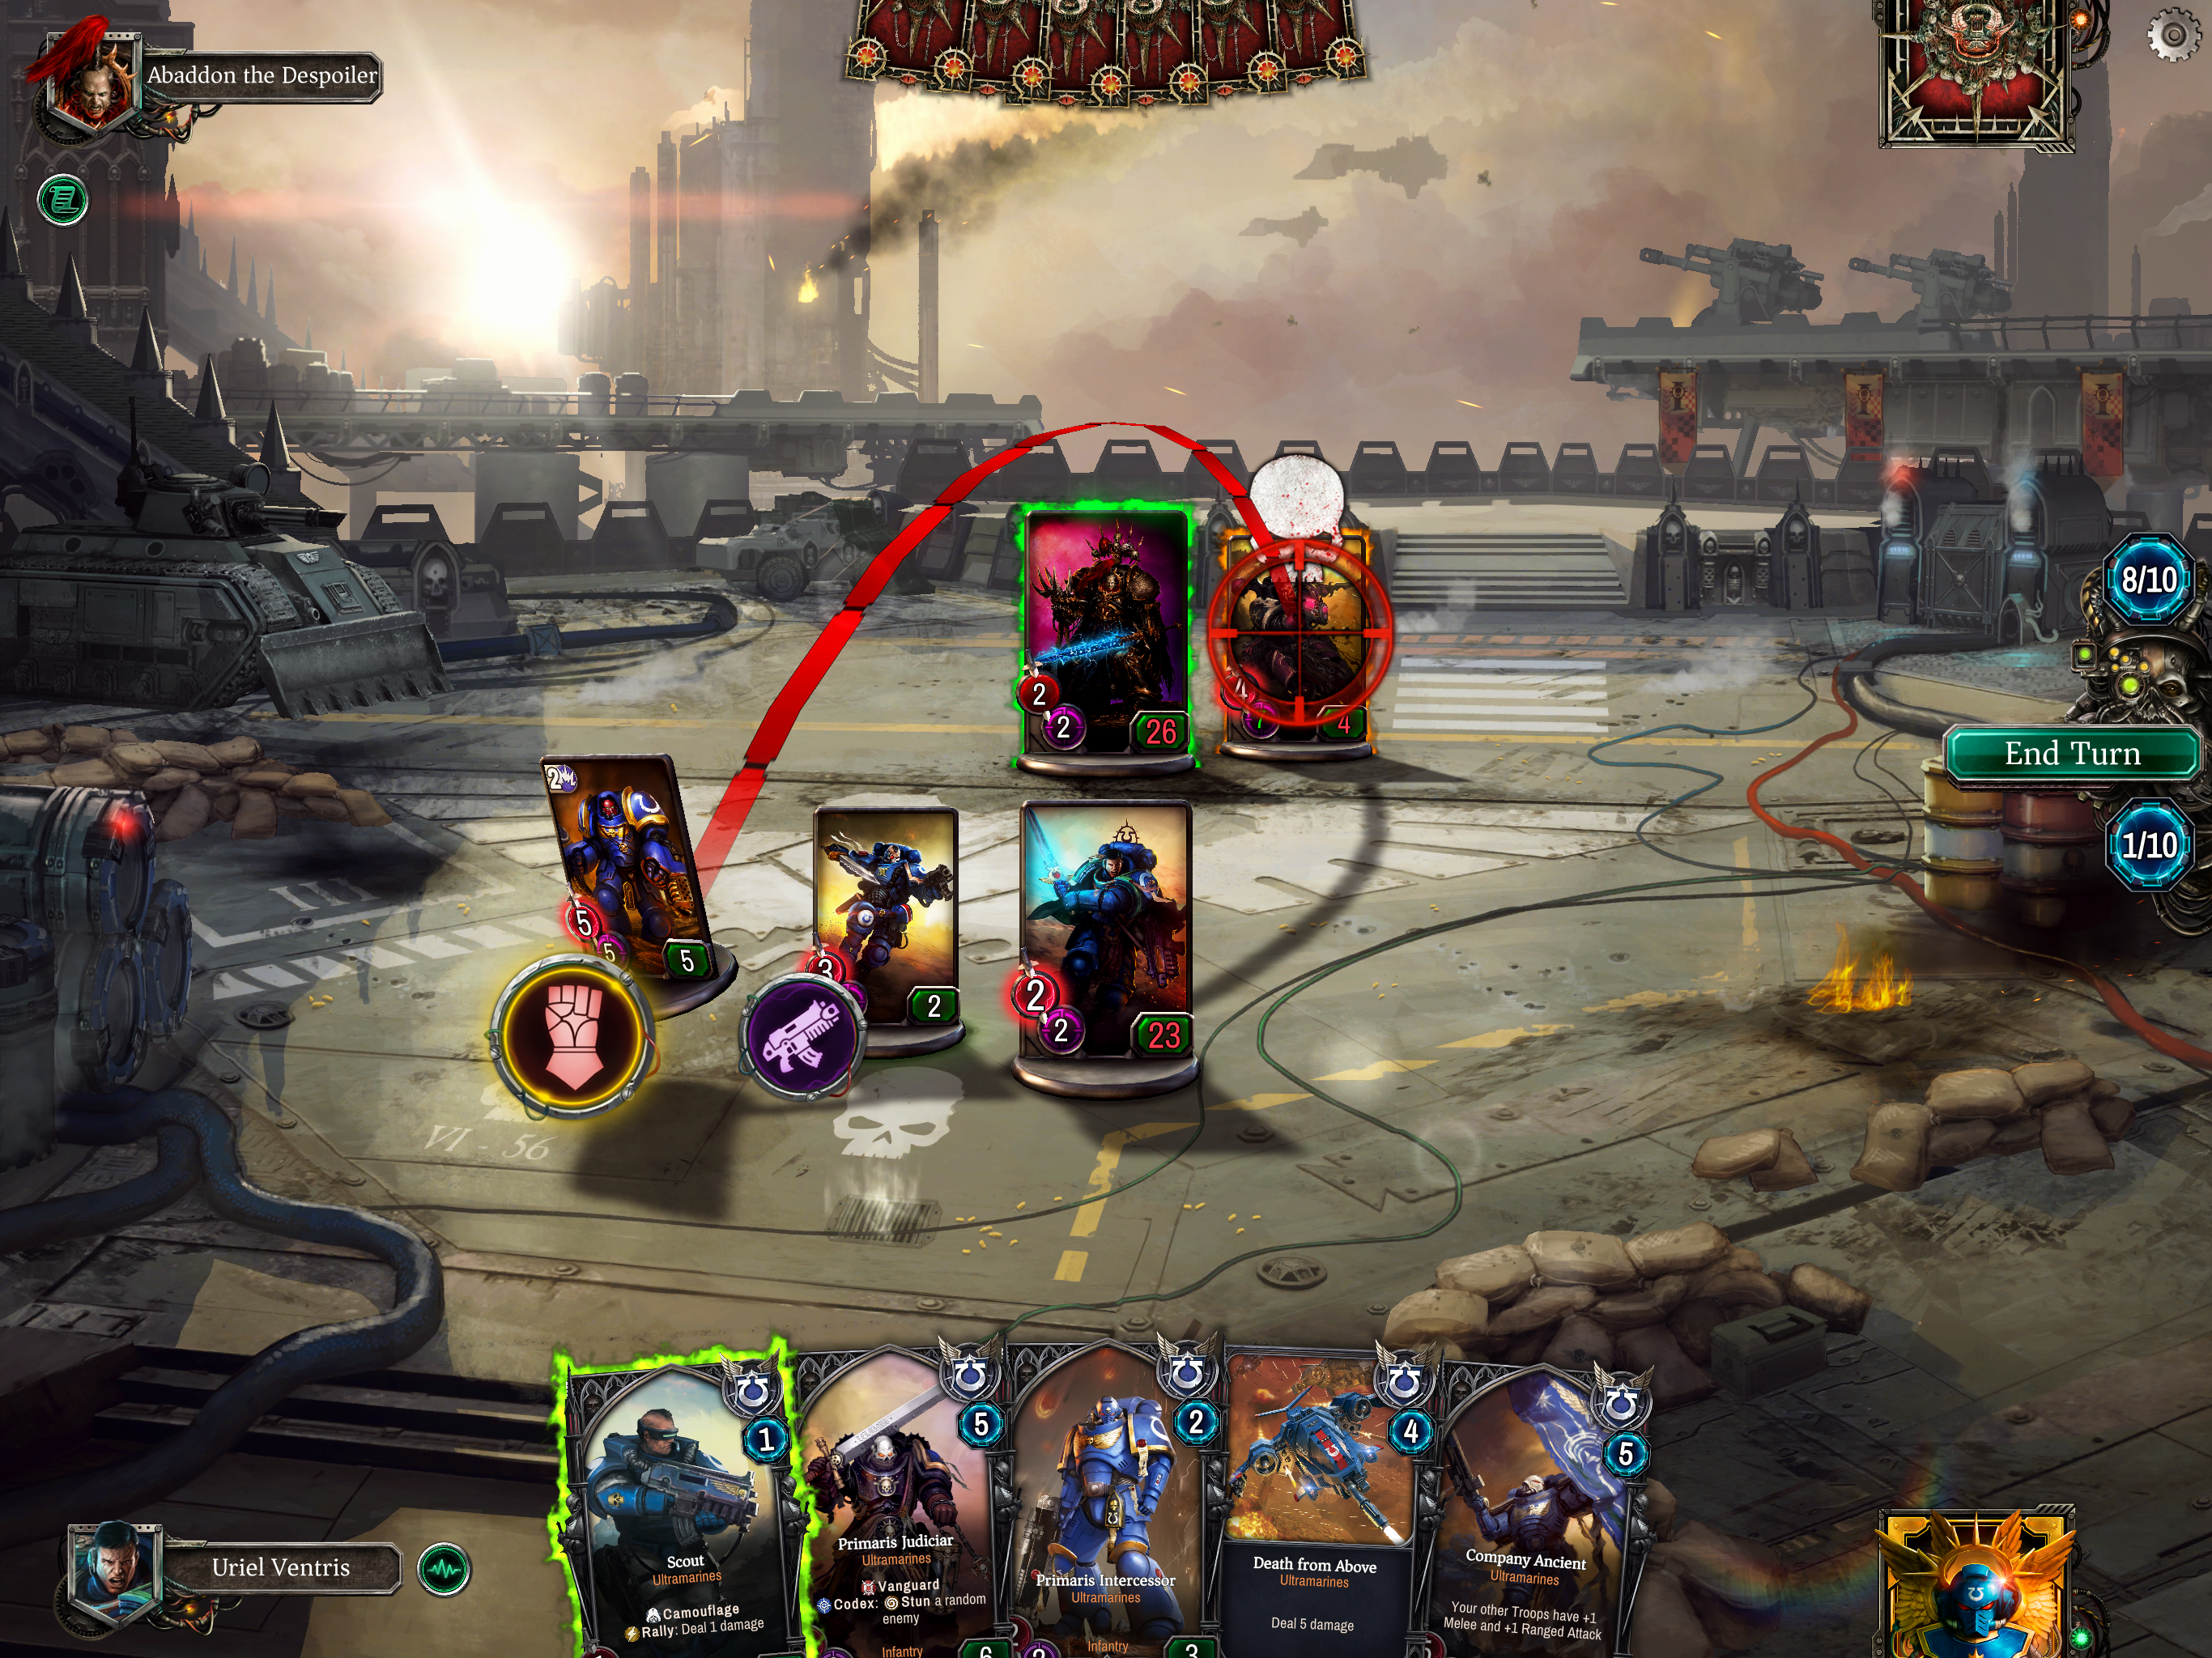 Screenshot of iOS device gameplay in Warhammer 40,000: Warpforge